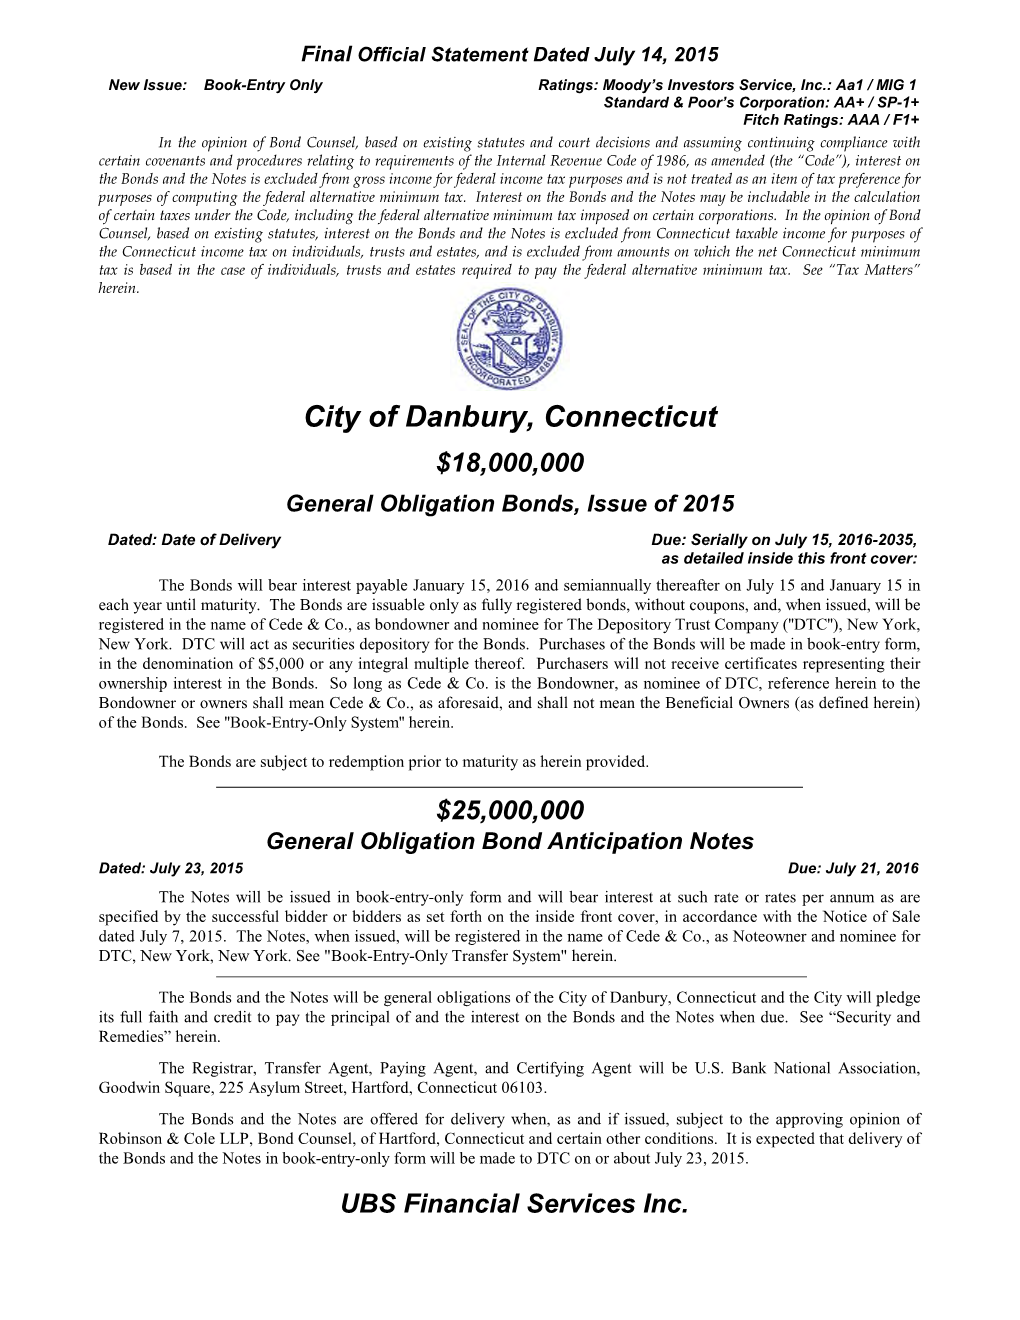 City of Danbury, Connecticut $18,000,000 General Obligation Bonds, Issue of 2015